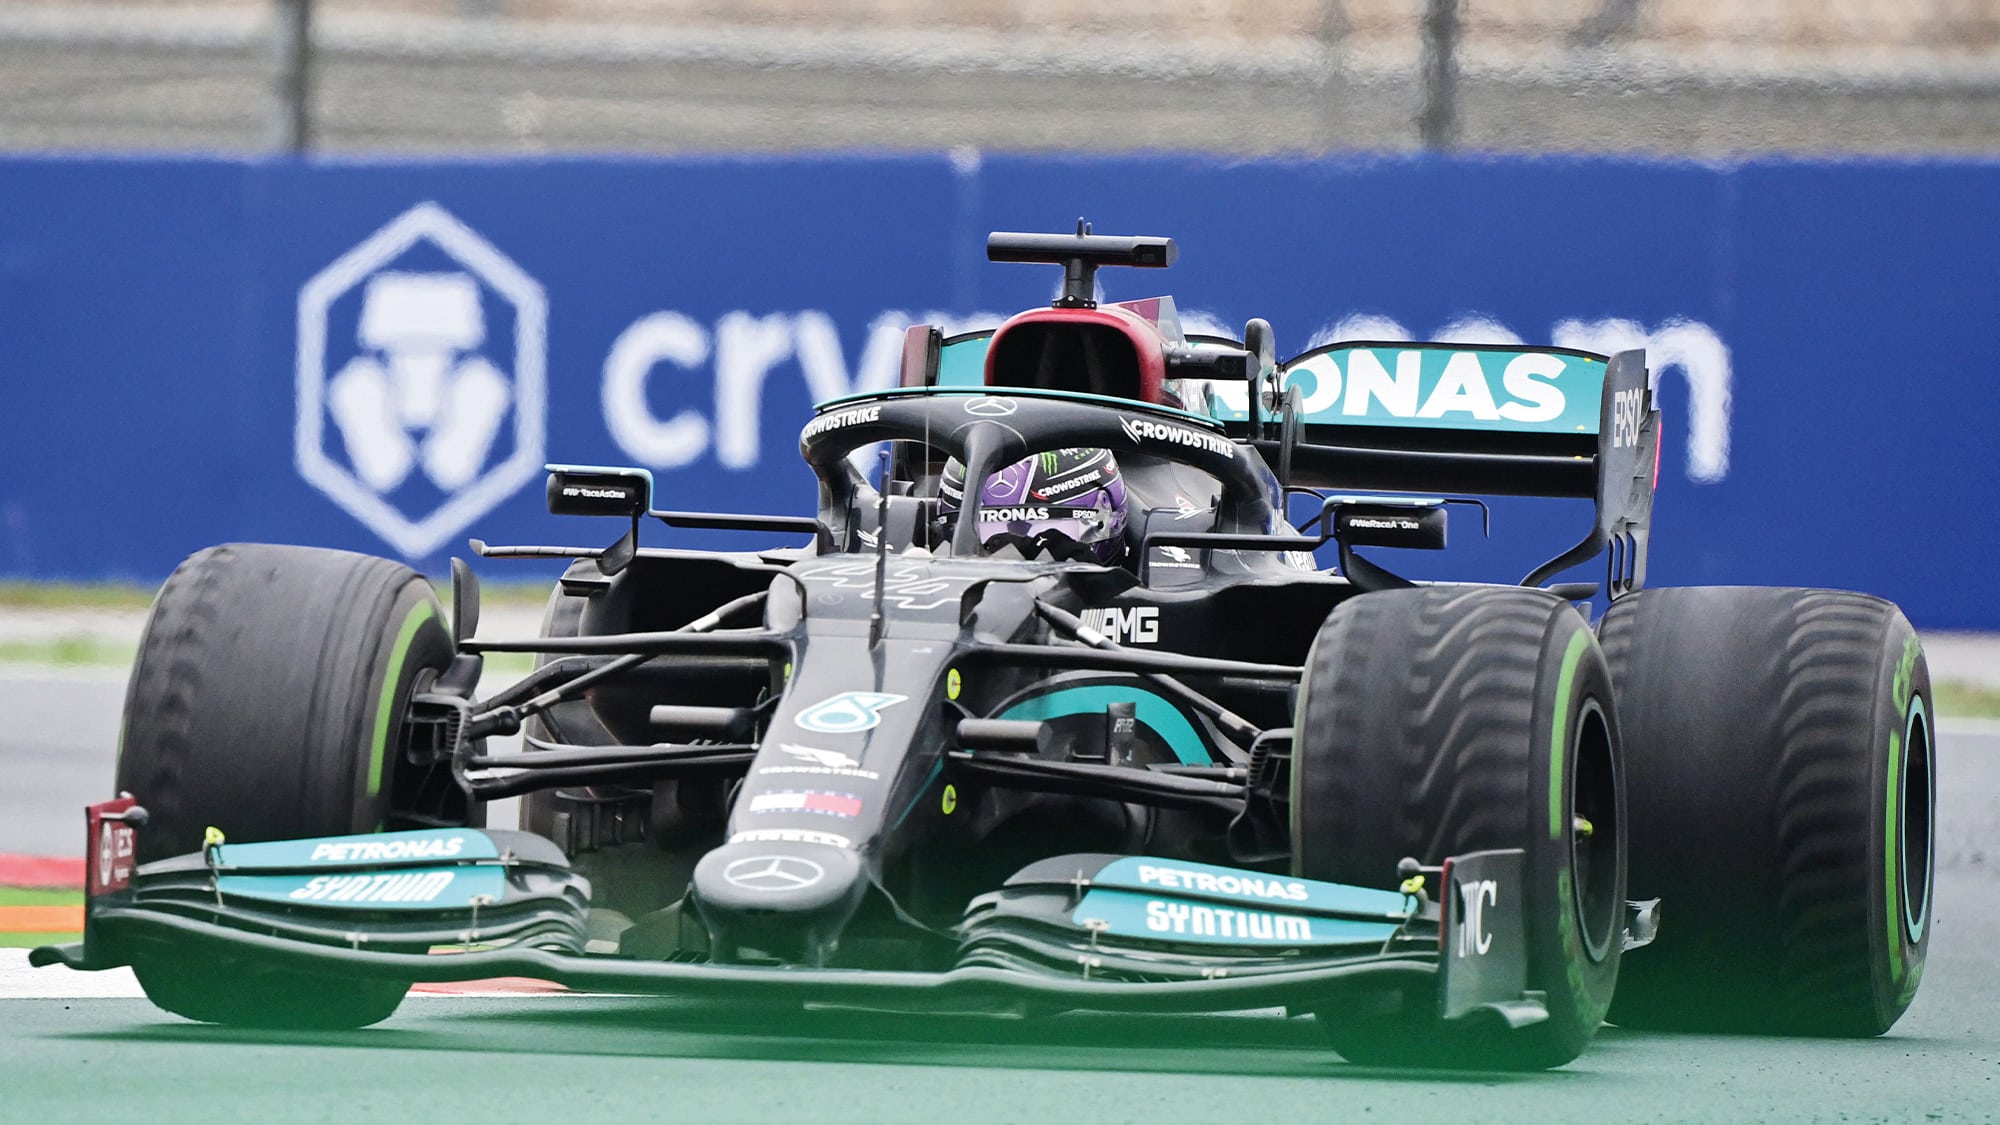 Lewis Hamilton on worn intermediate tyres at the 2021 Turkish Grand Prix